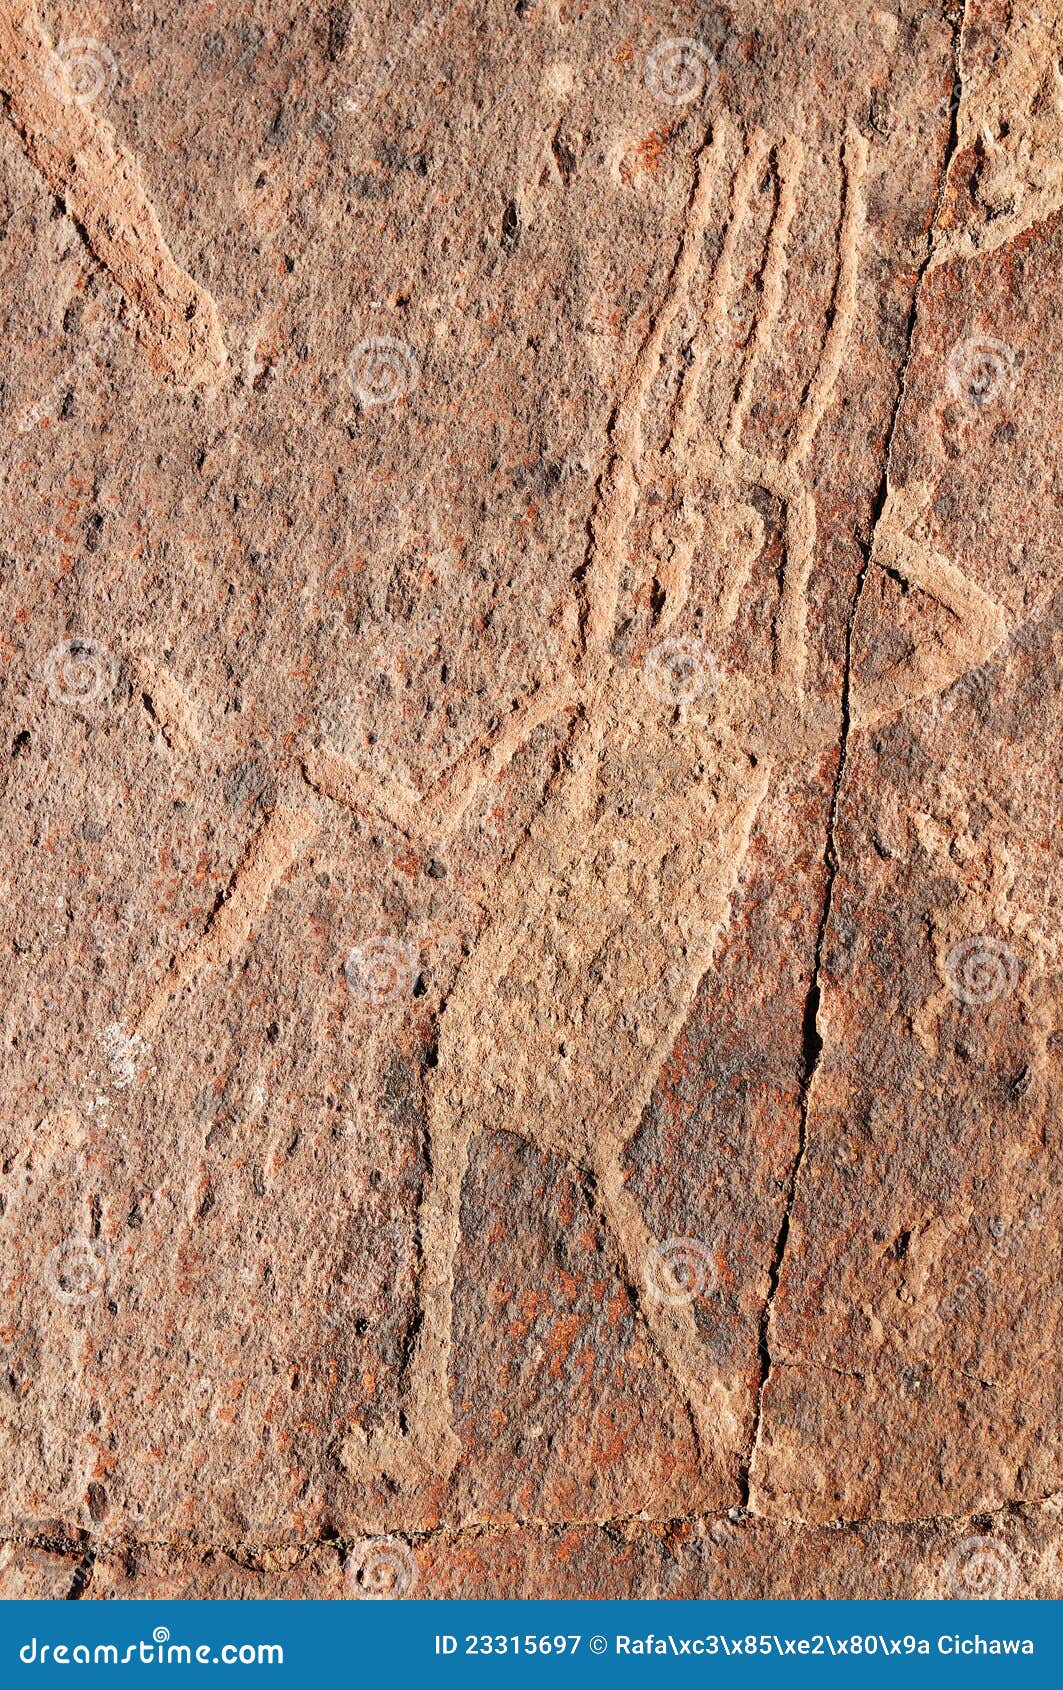 peru, toro muerto petroglyphs